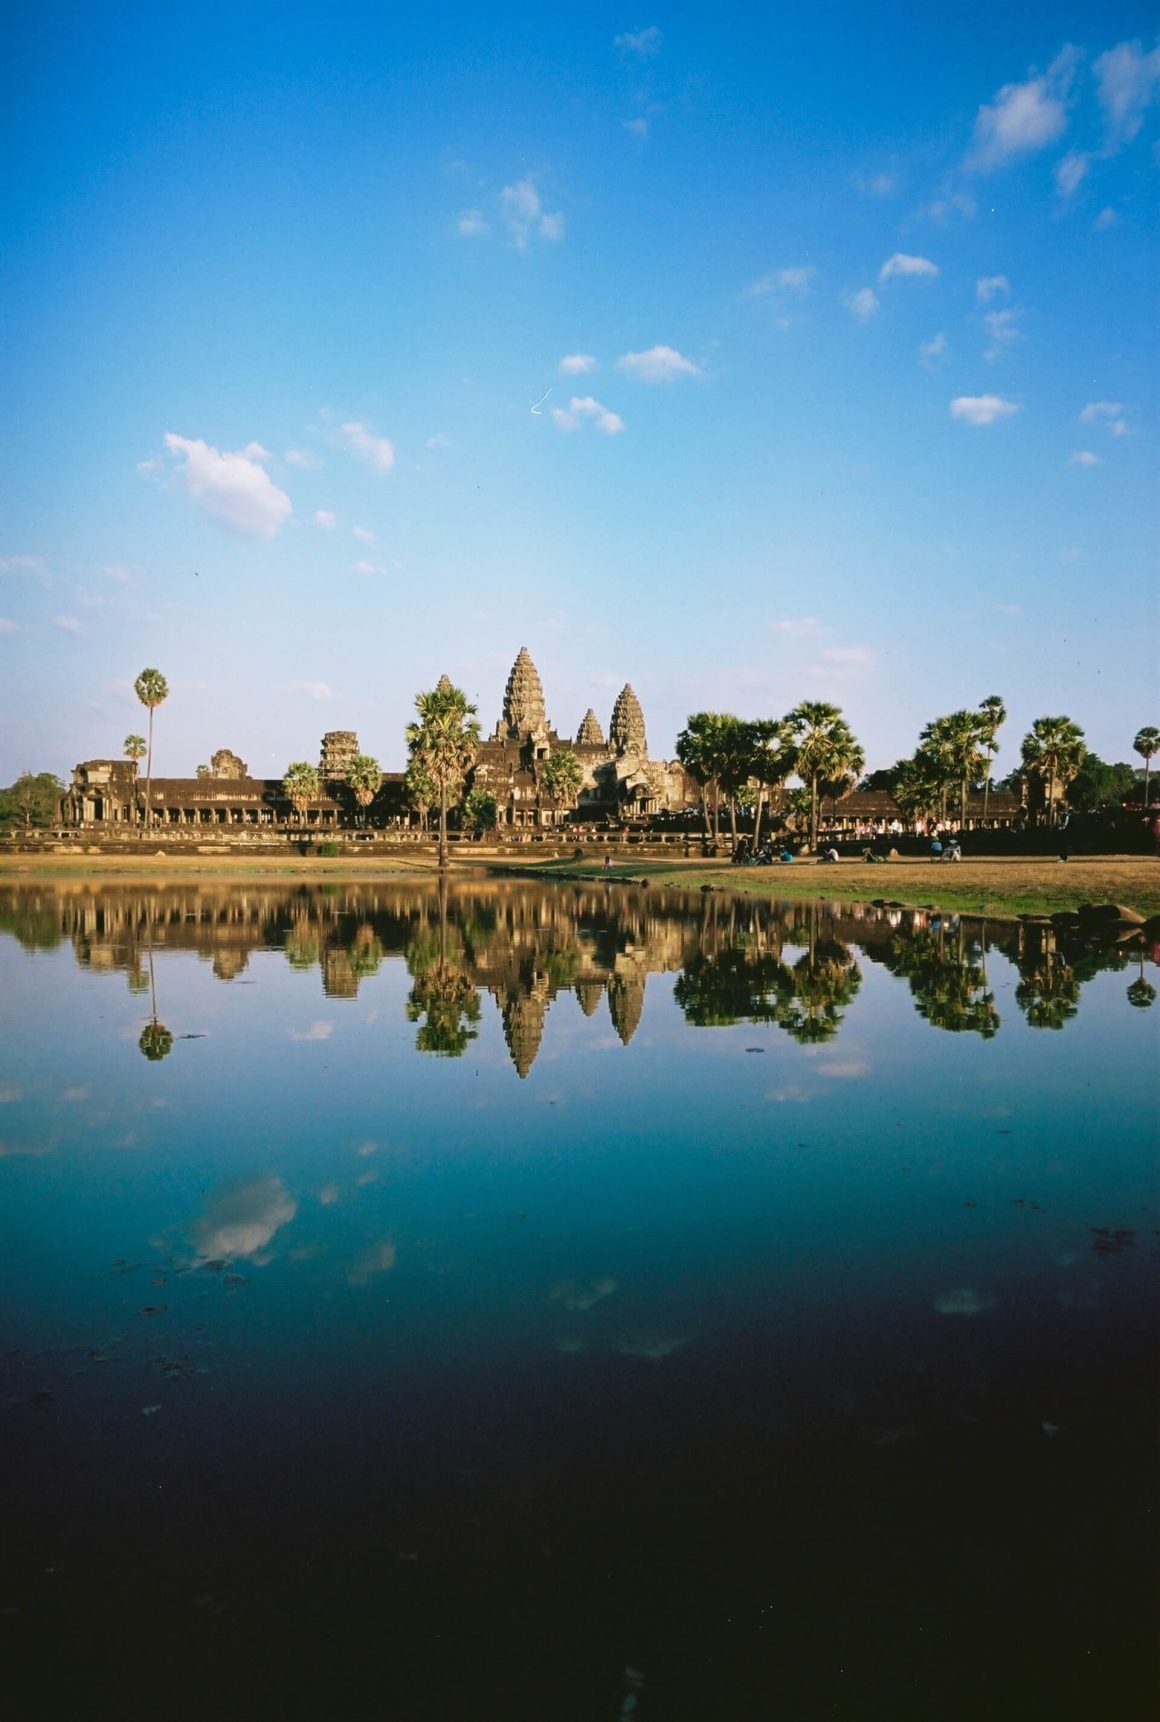 Khmer temple ruins